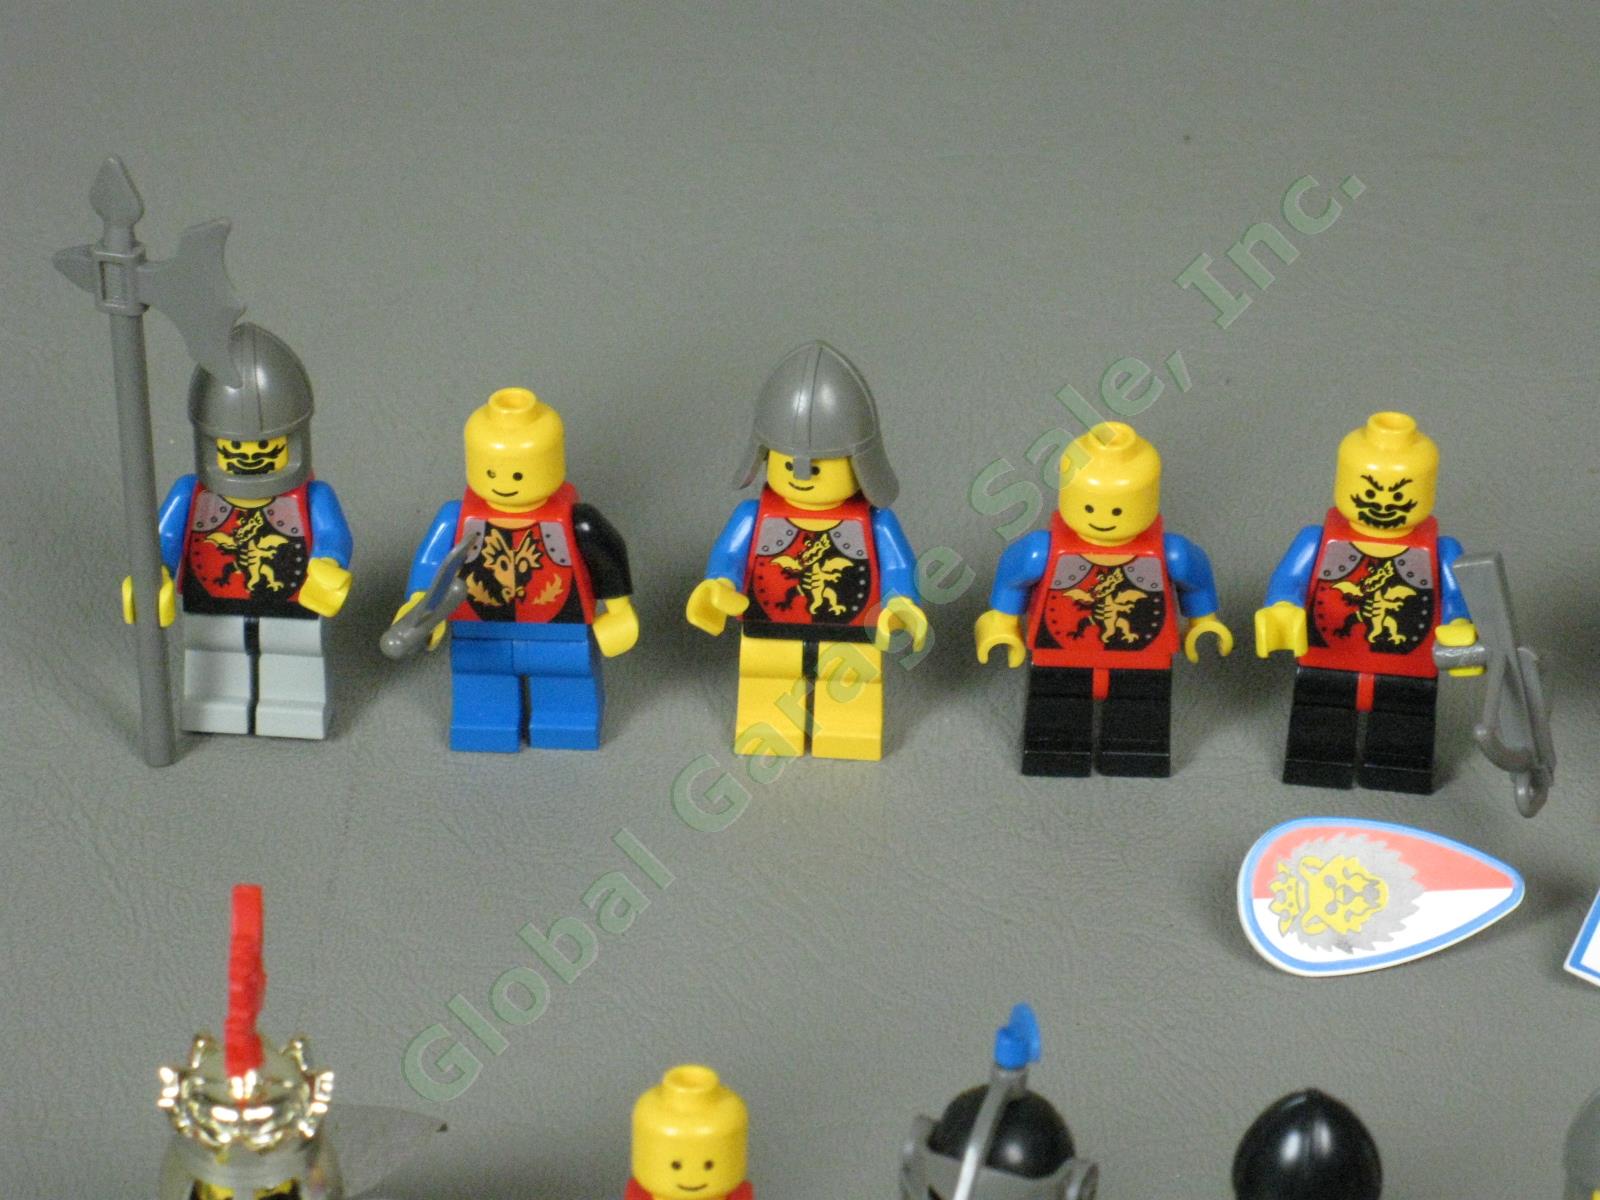 HUGE Lot 45 Lego Medieval Fright Knight Figure Minifigure Castle Armor Extra Set 1